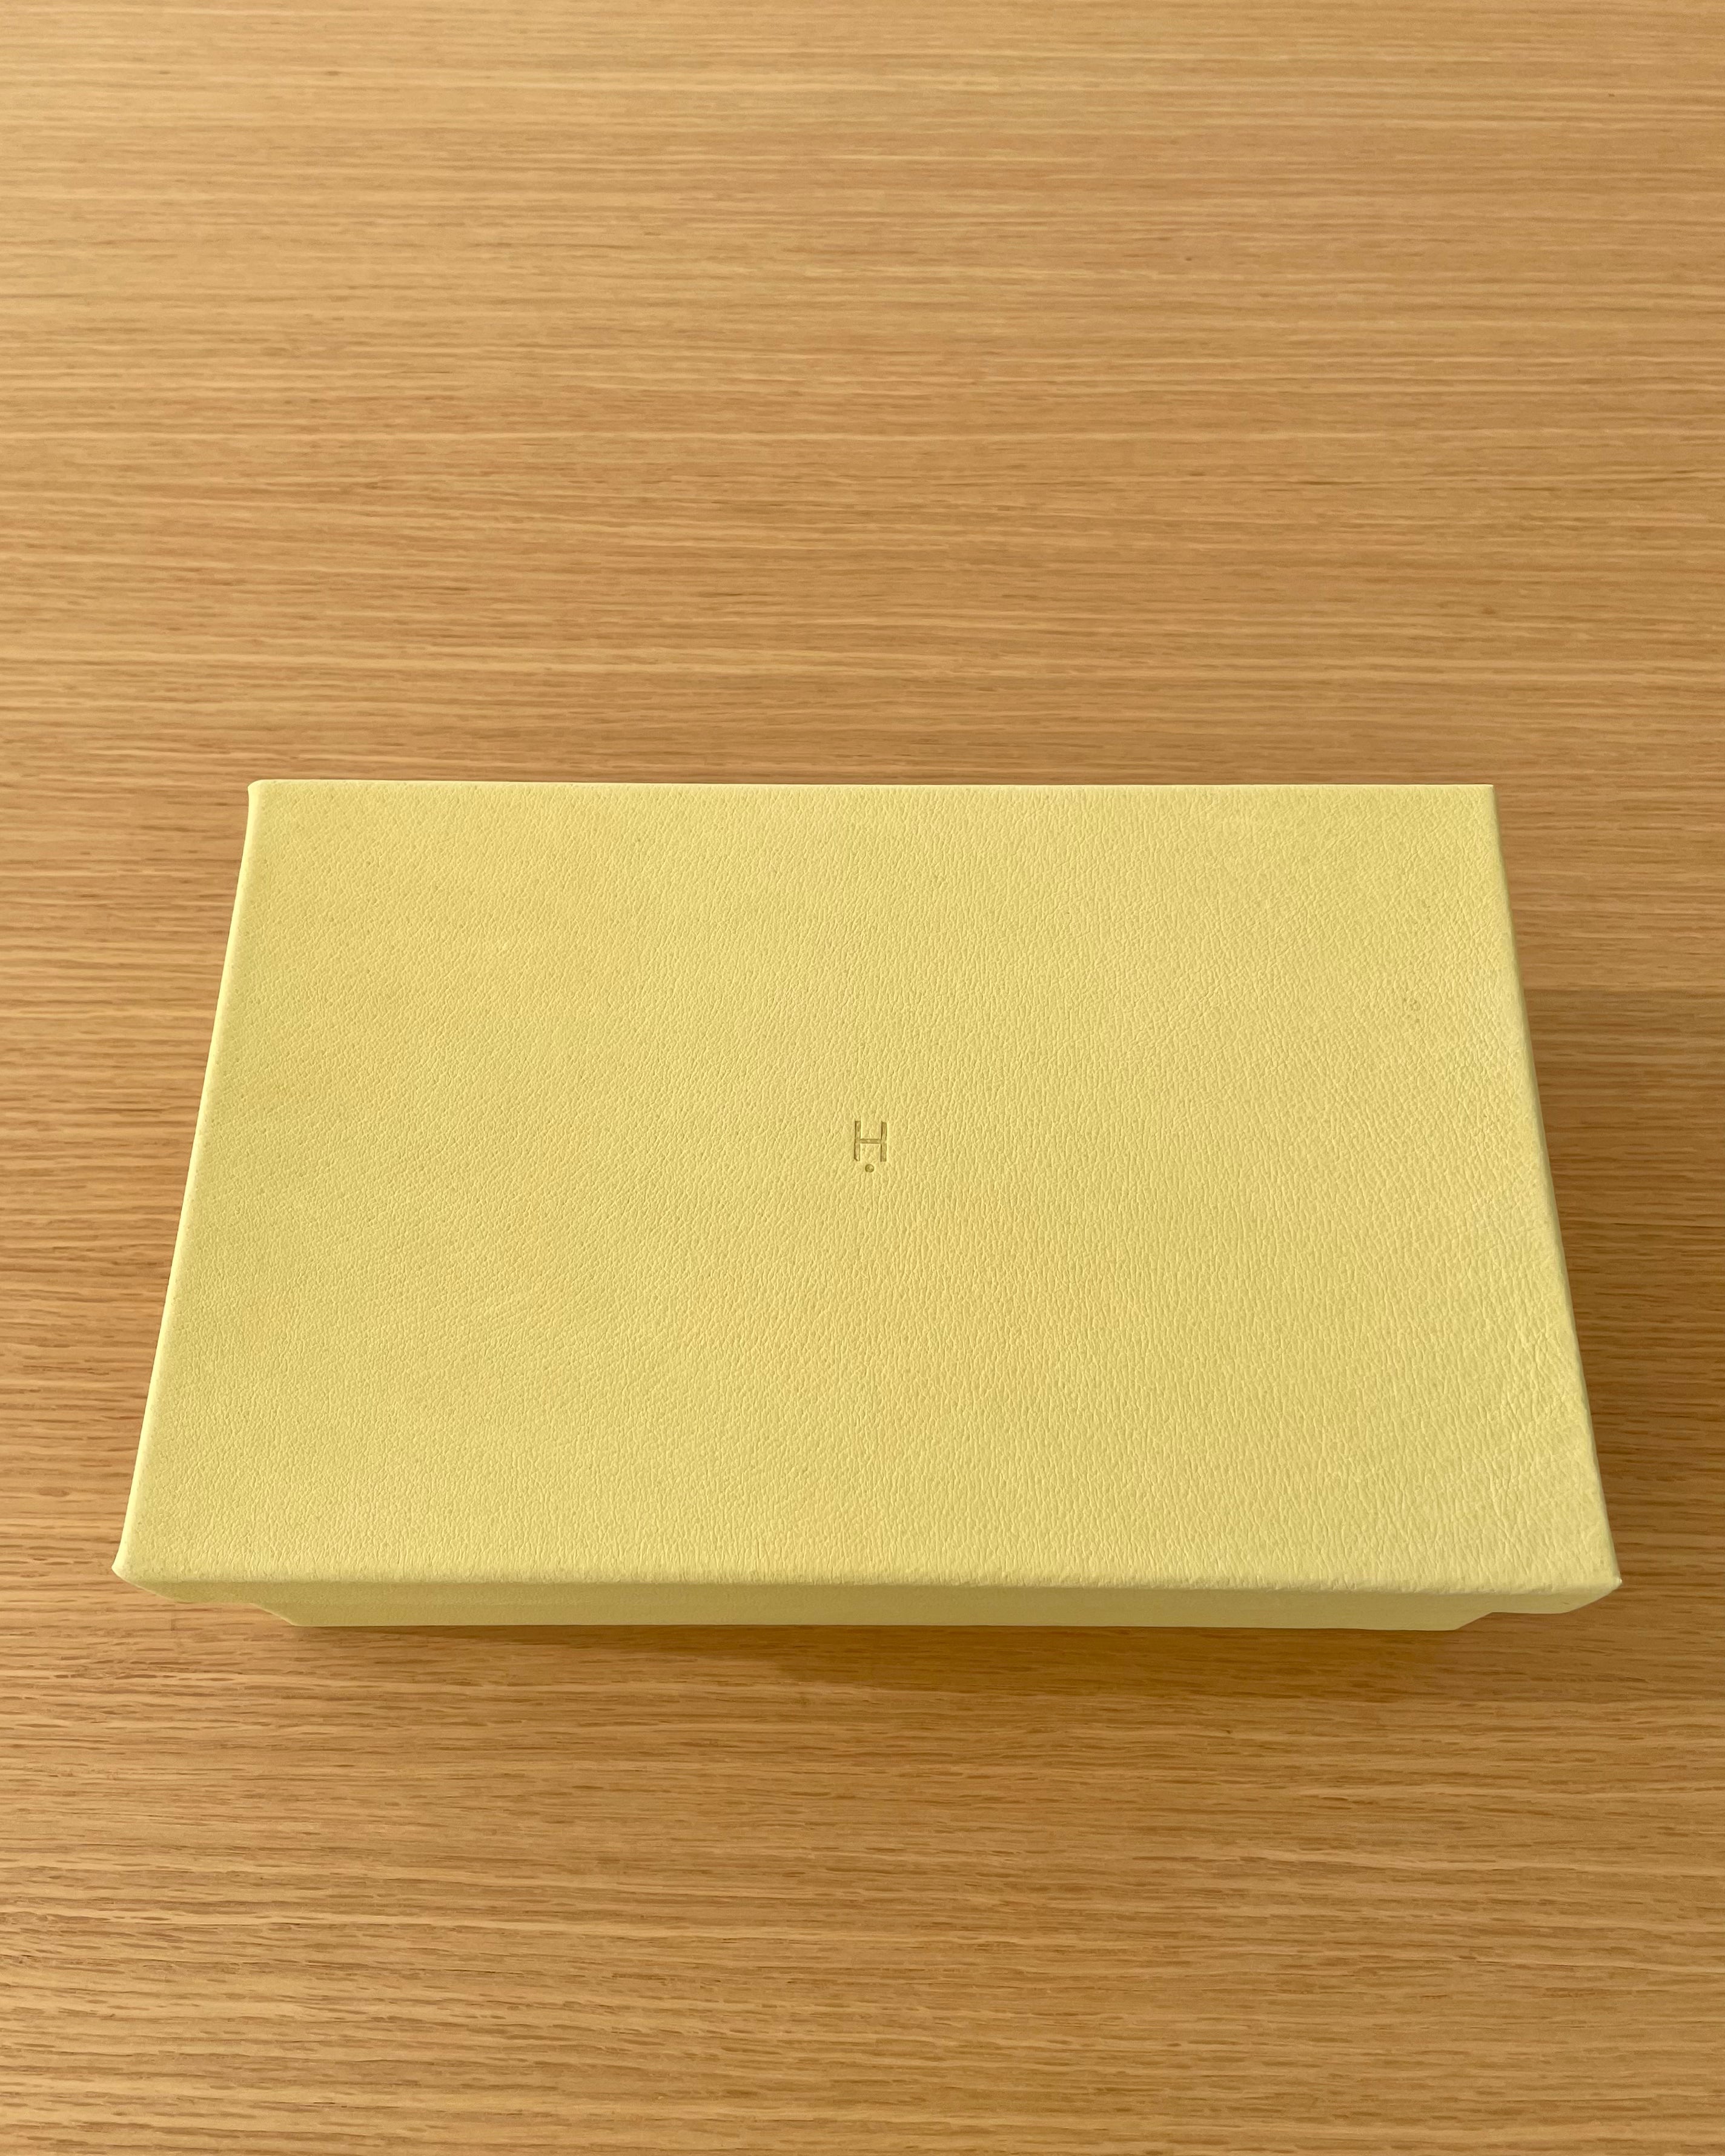 Haribacco Box - Large - Light  Yellow Green